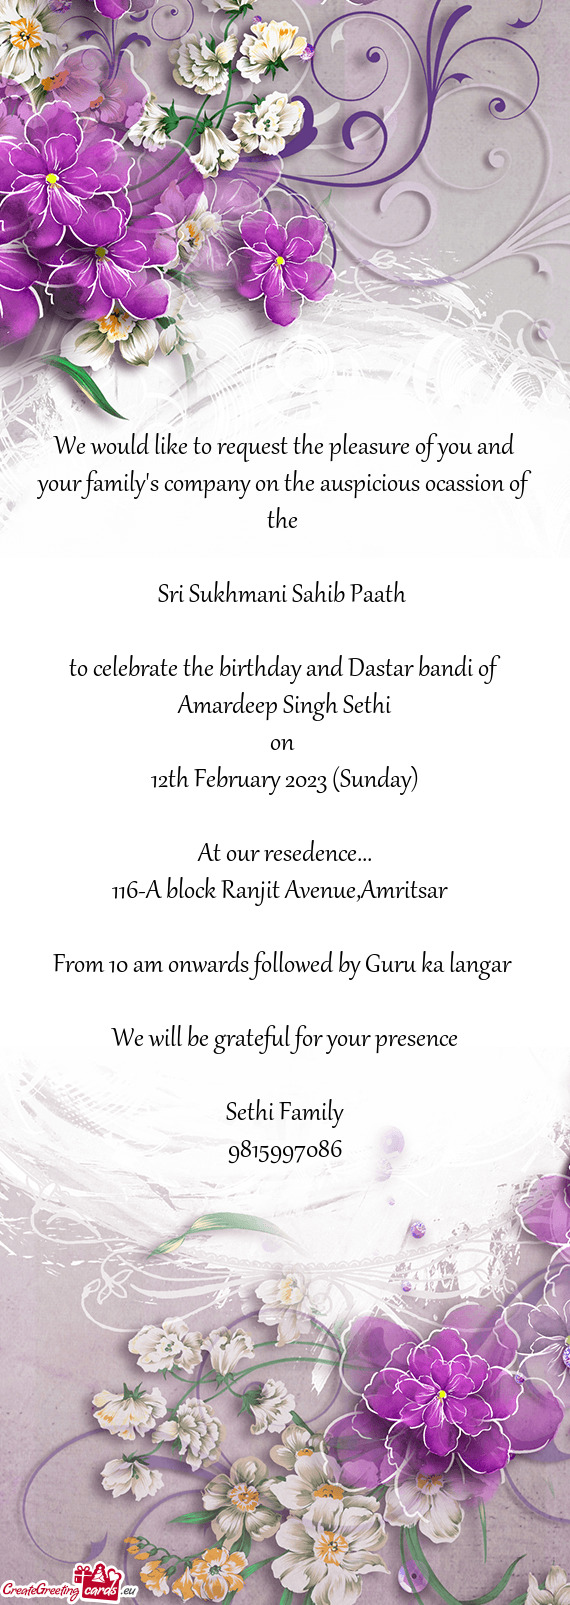 To celebrate the birthday and Dastar bandi of